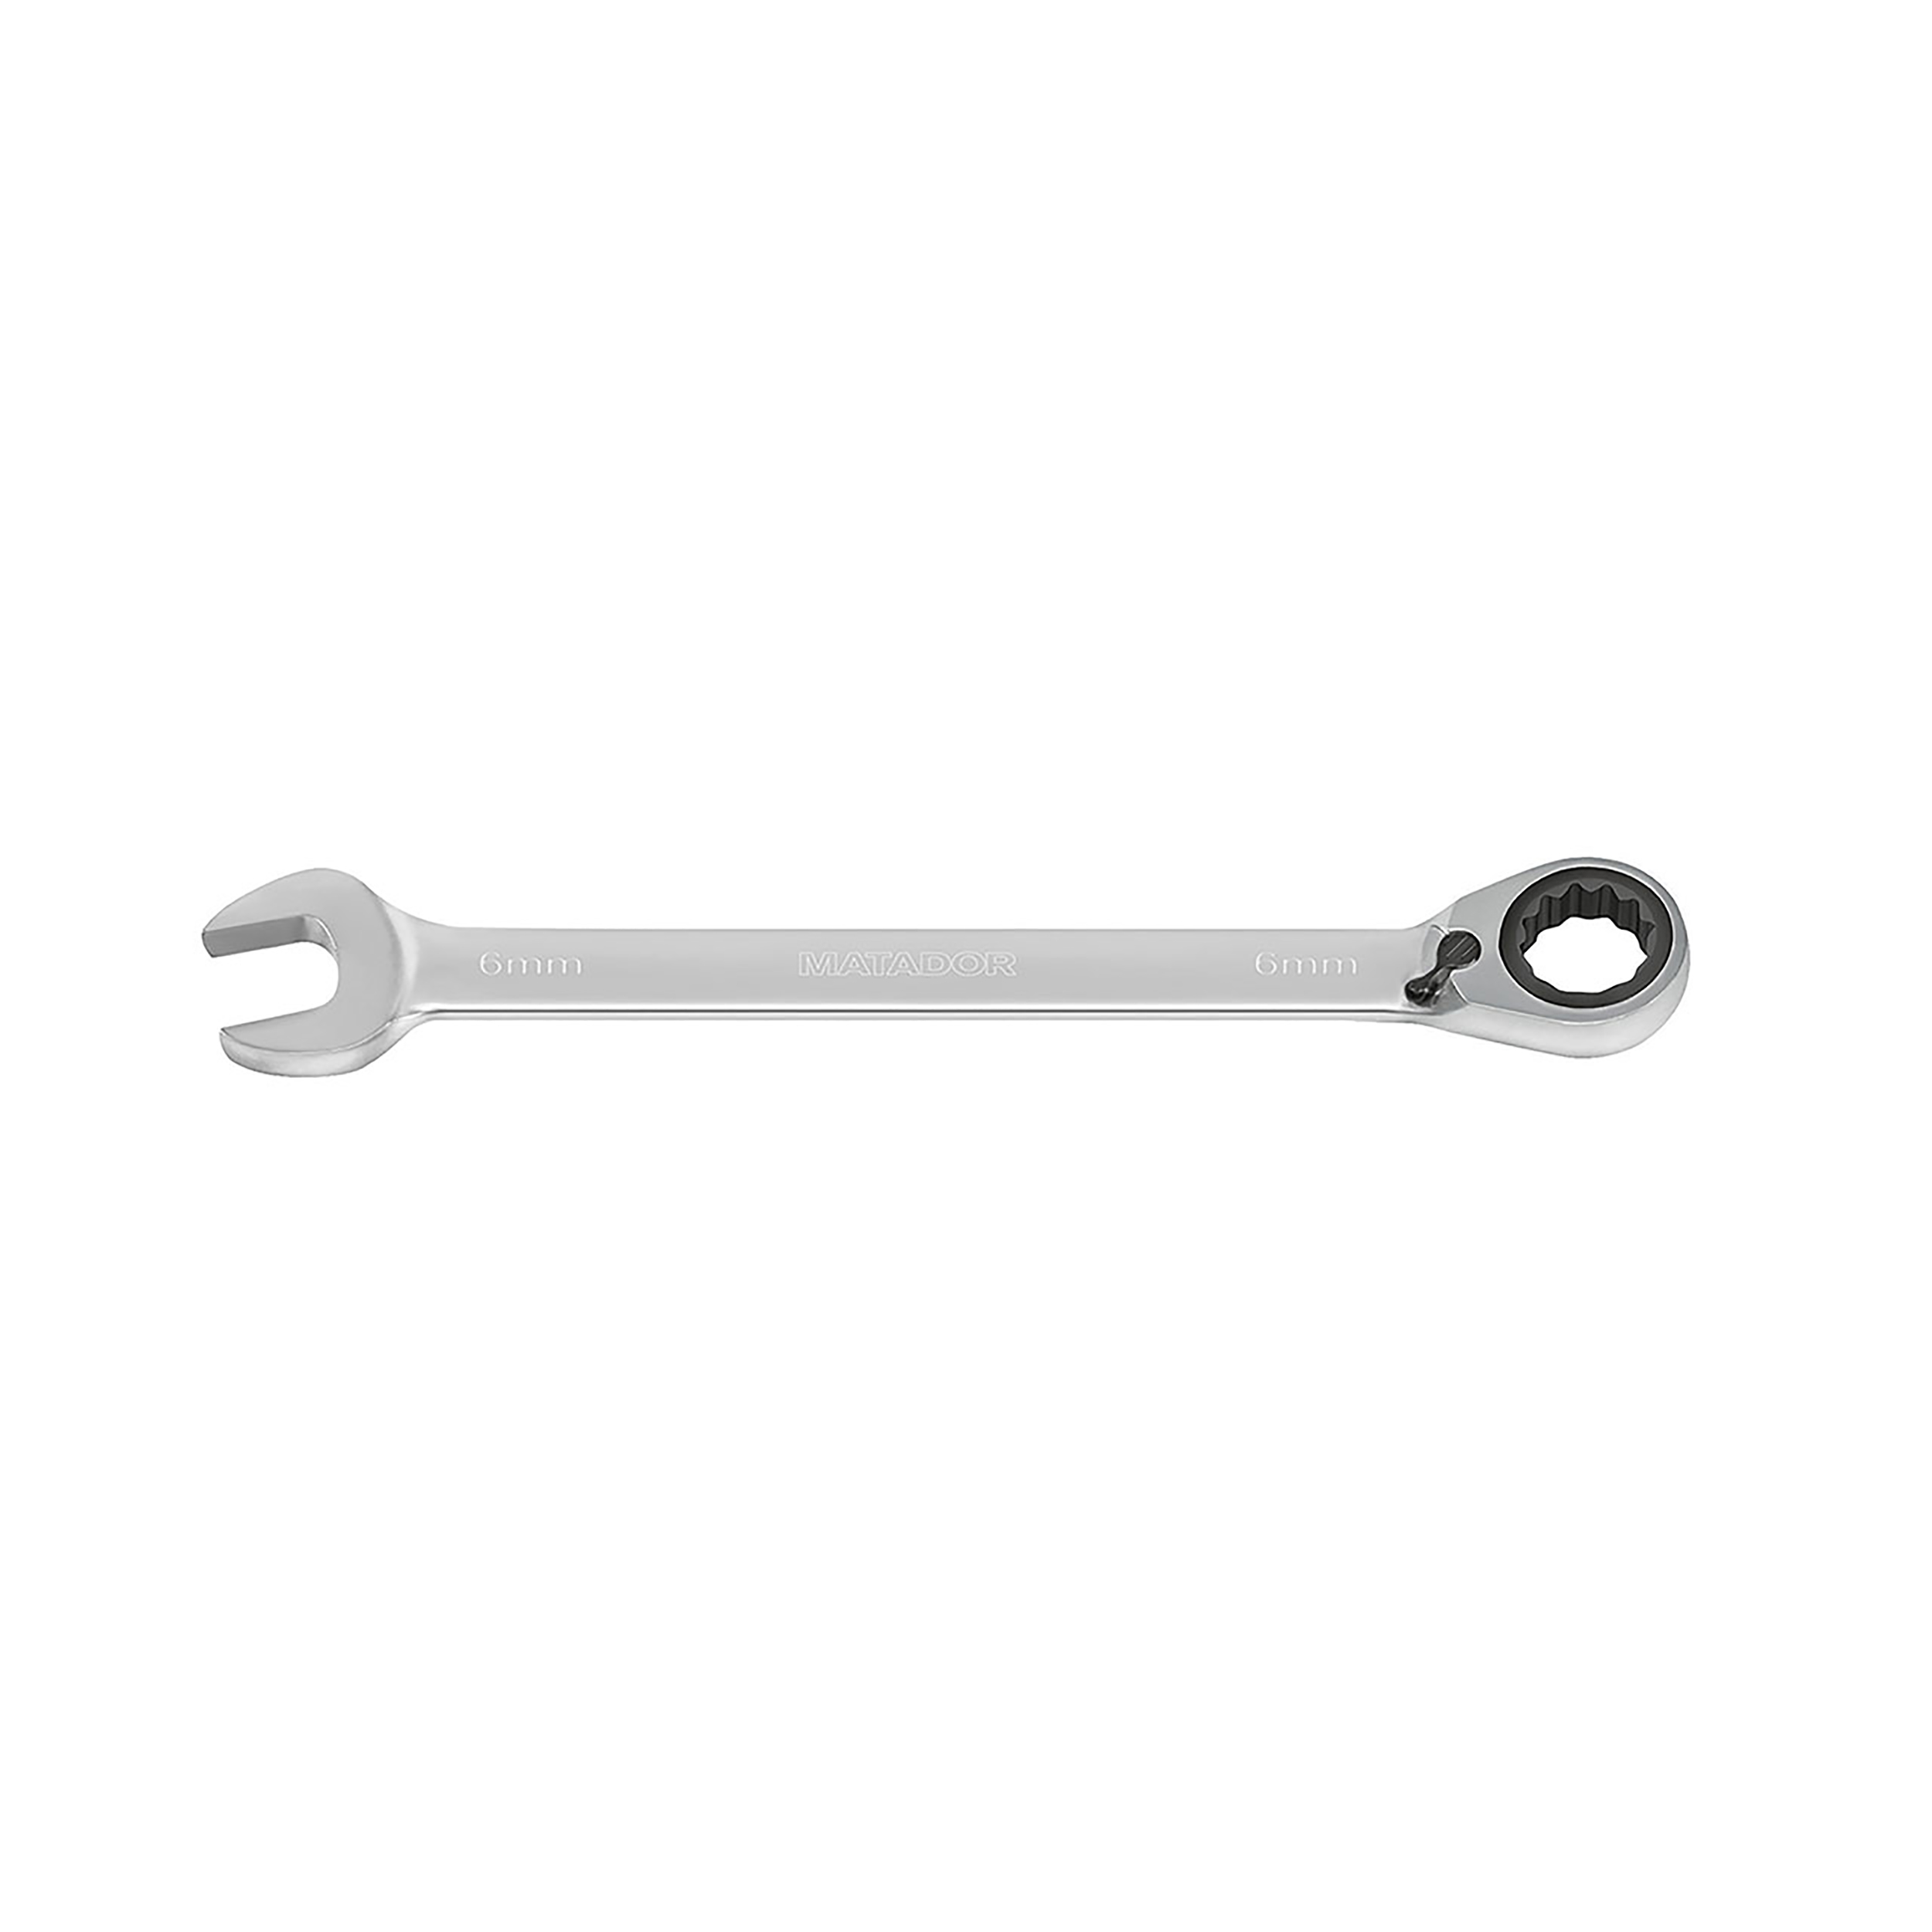 Knarren-Ringmaulschlüssel mit Hebel, 18 mm, 364 Nm, MATADOR Art.-Nr.: 01890180